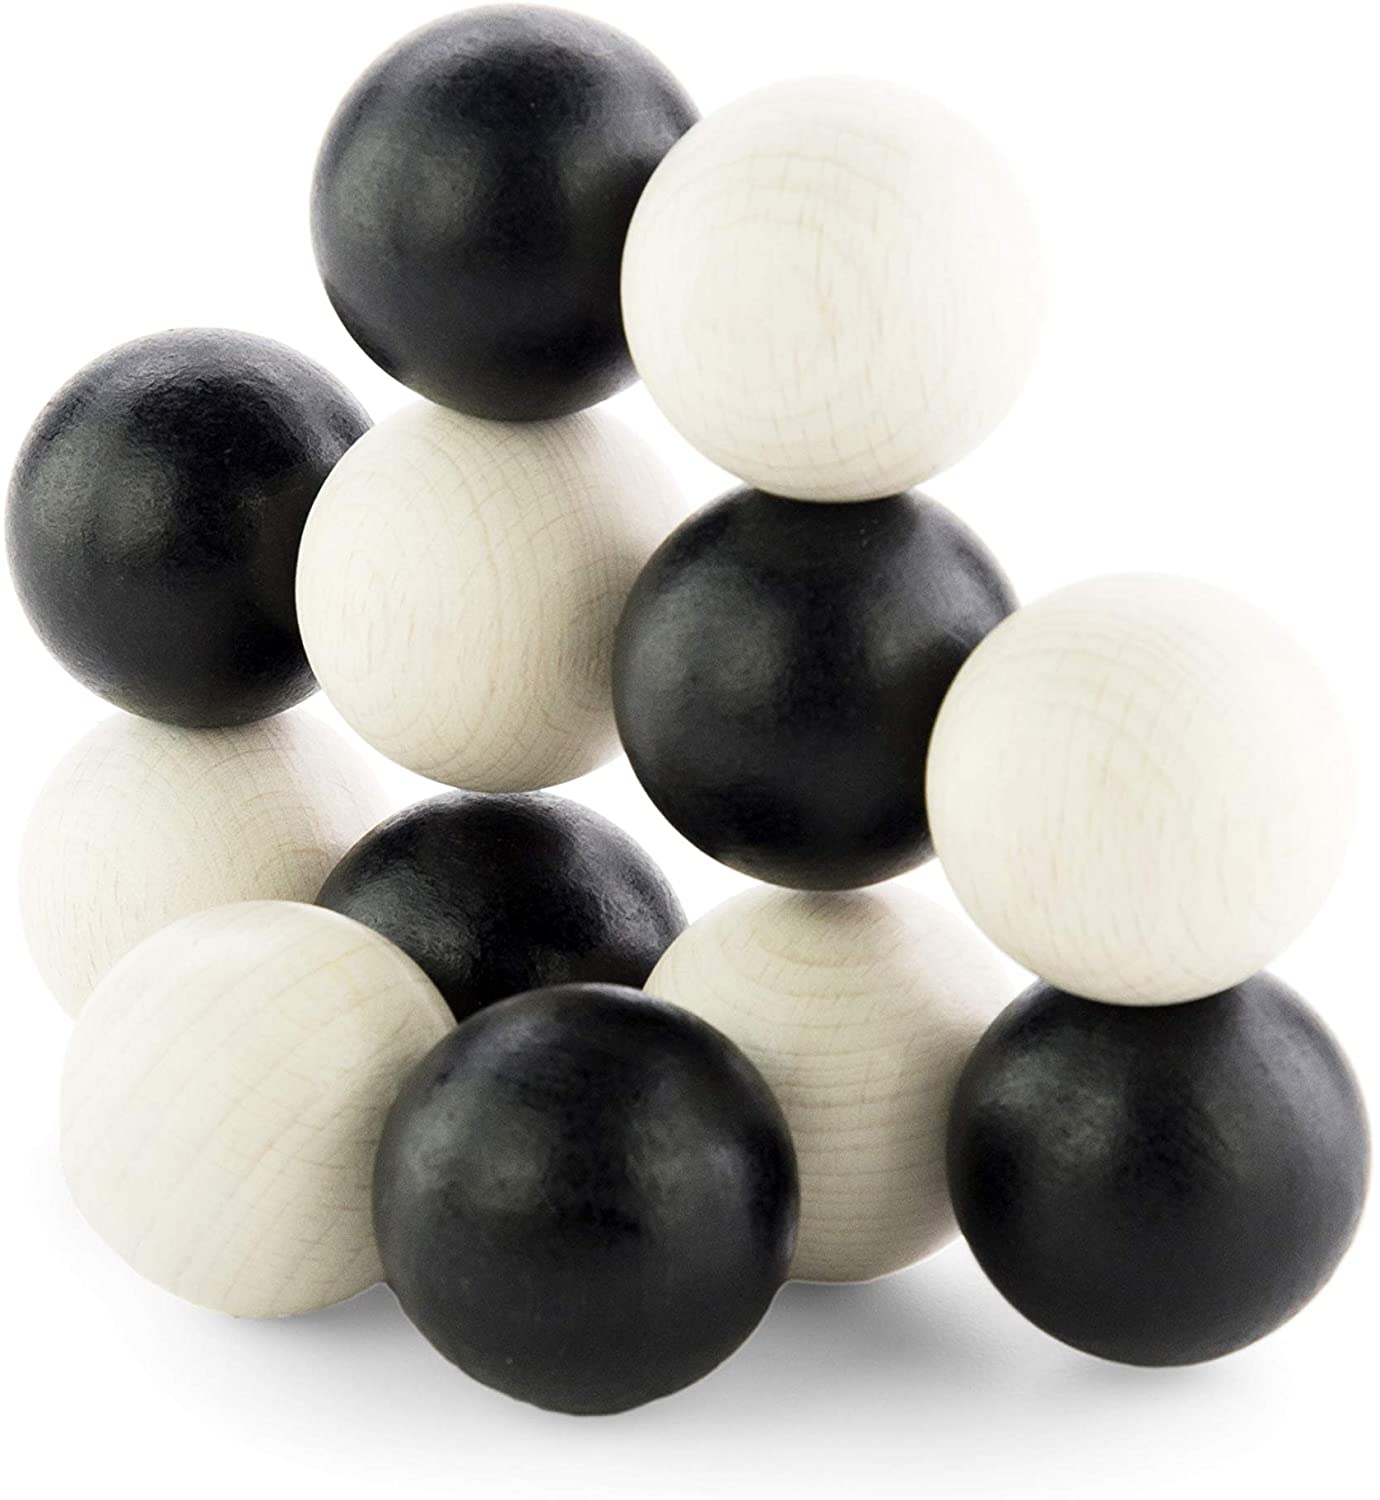 Playable Art Balls - Monochrome